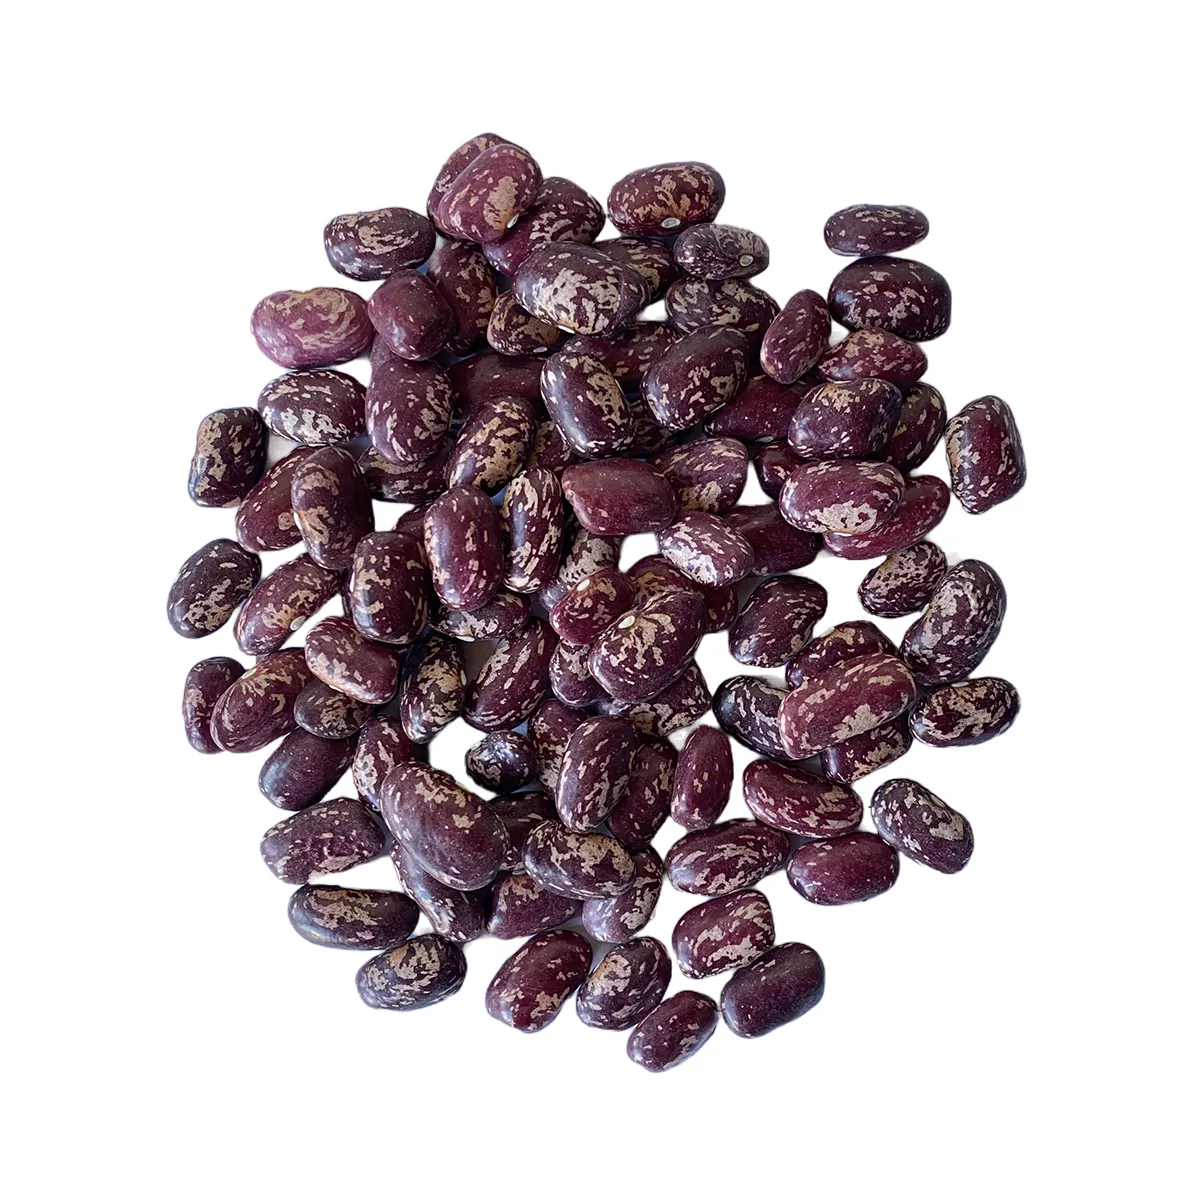 Highest quality Natural Dry Beans Good Price Uzbekistan Product Bulk Speckled Royal Kidney Bean for food